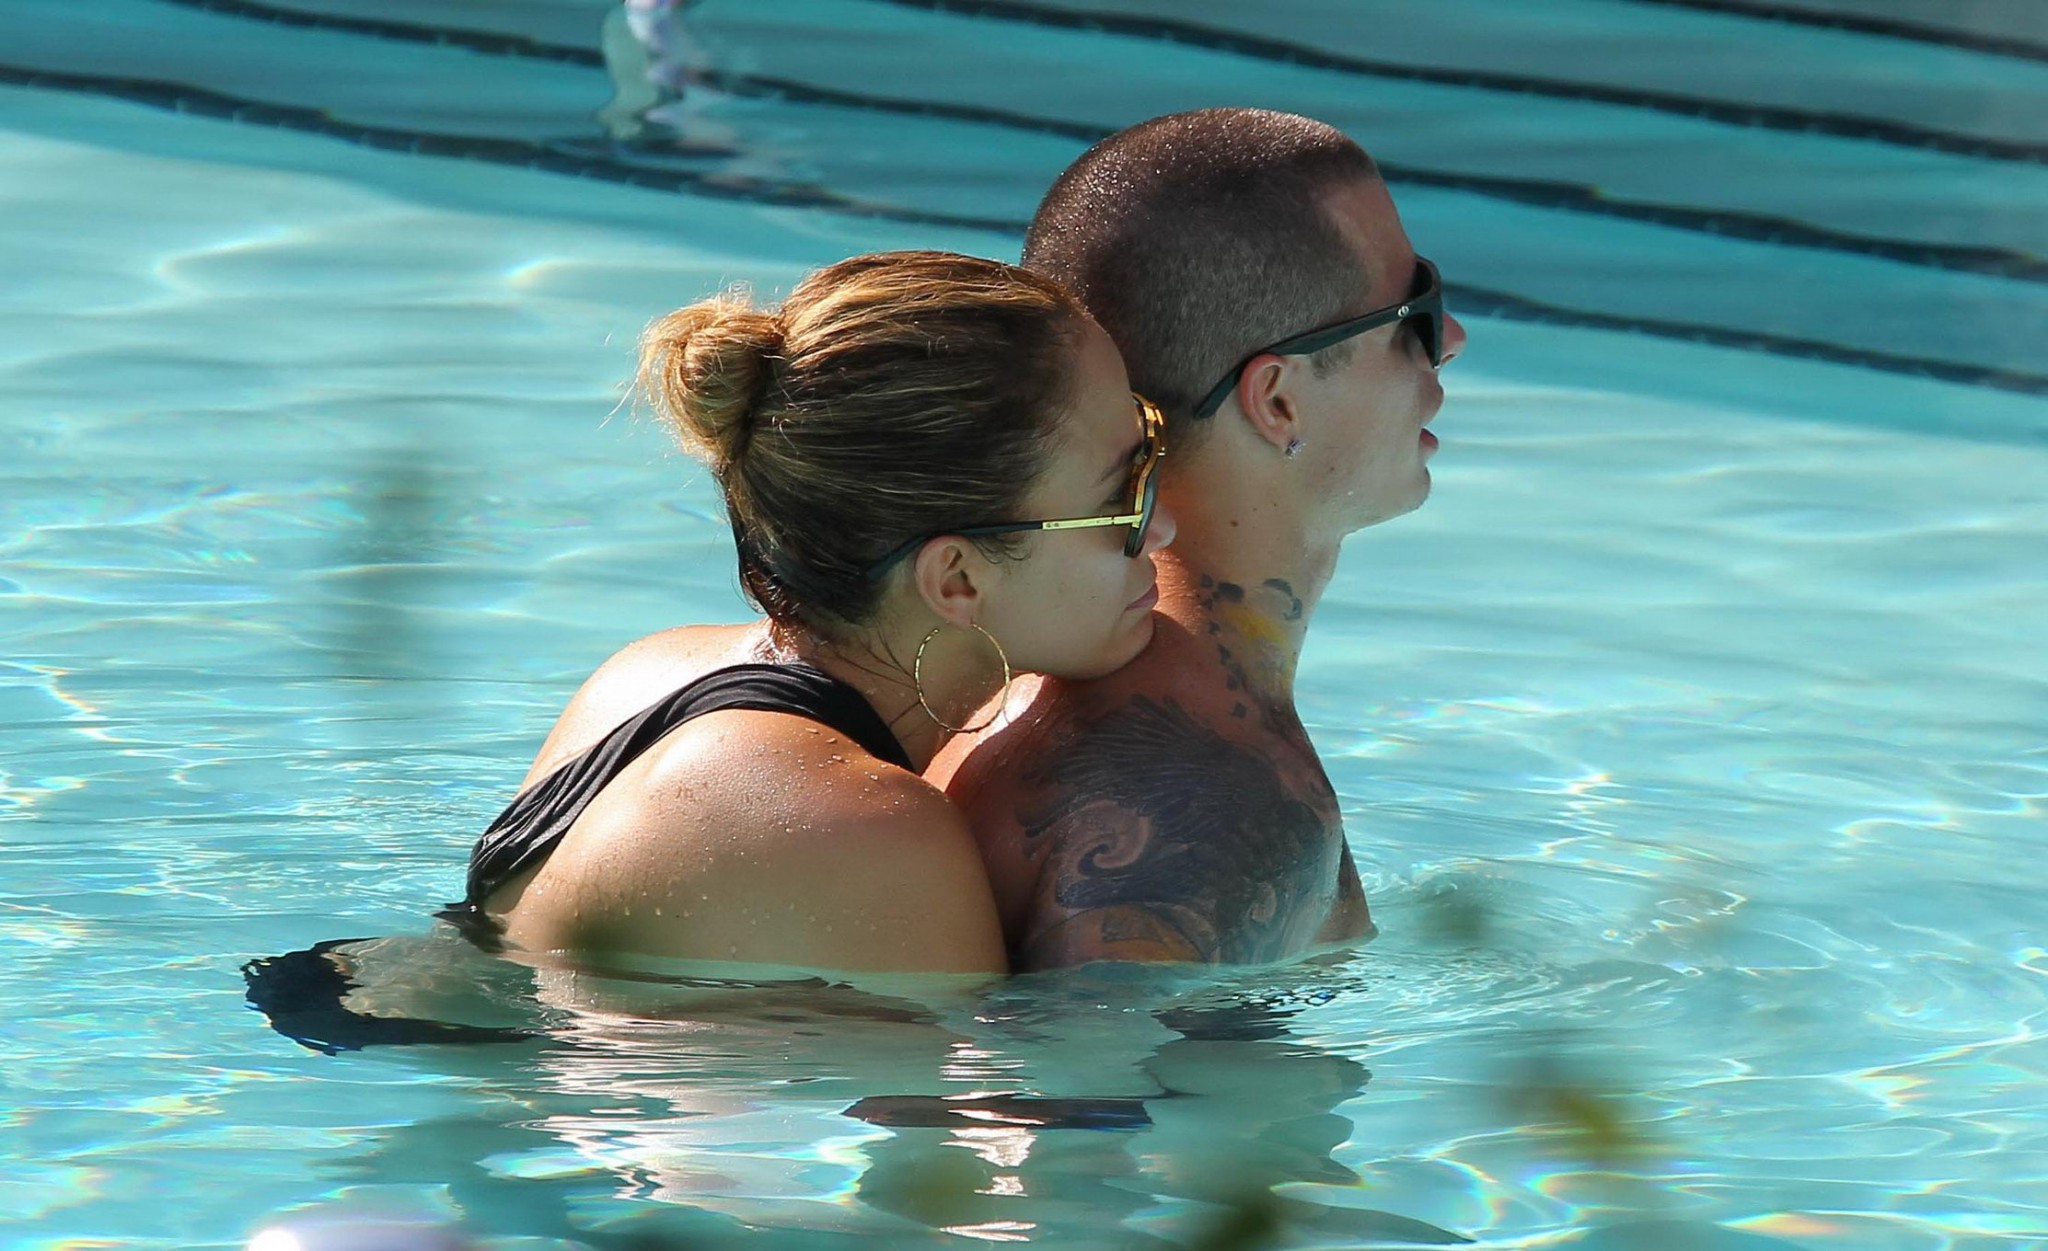 Jennifer lopez luciendo un sexy bikini negro en la piscina de un hotel en miami
 #75253666